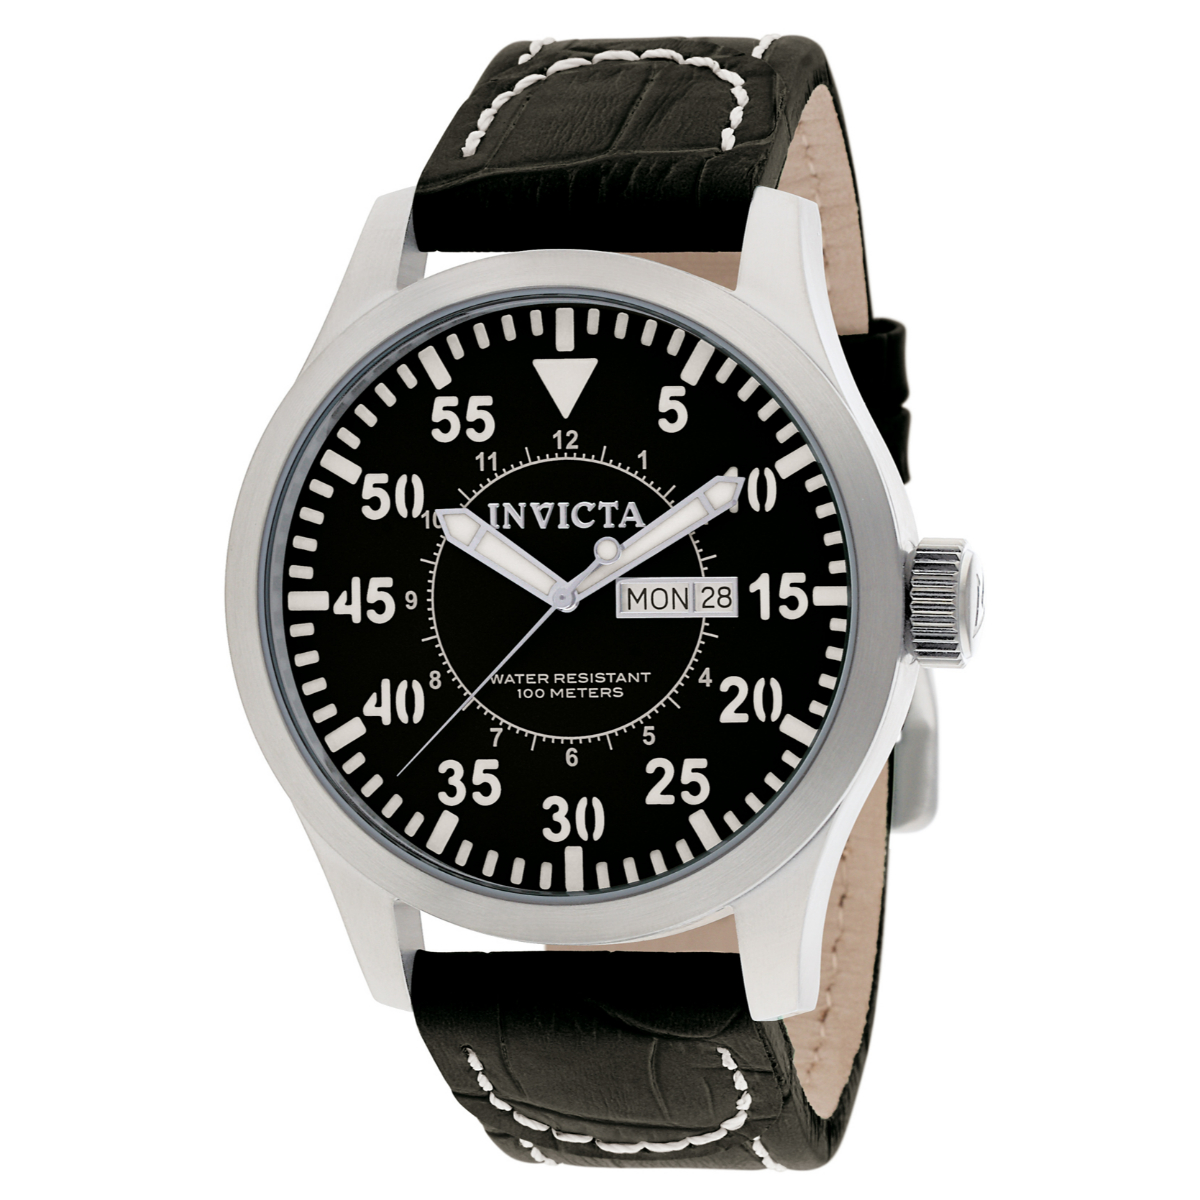 Invicta Specialty Men's Watch - 48mm, Black (ZG-11184)